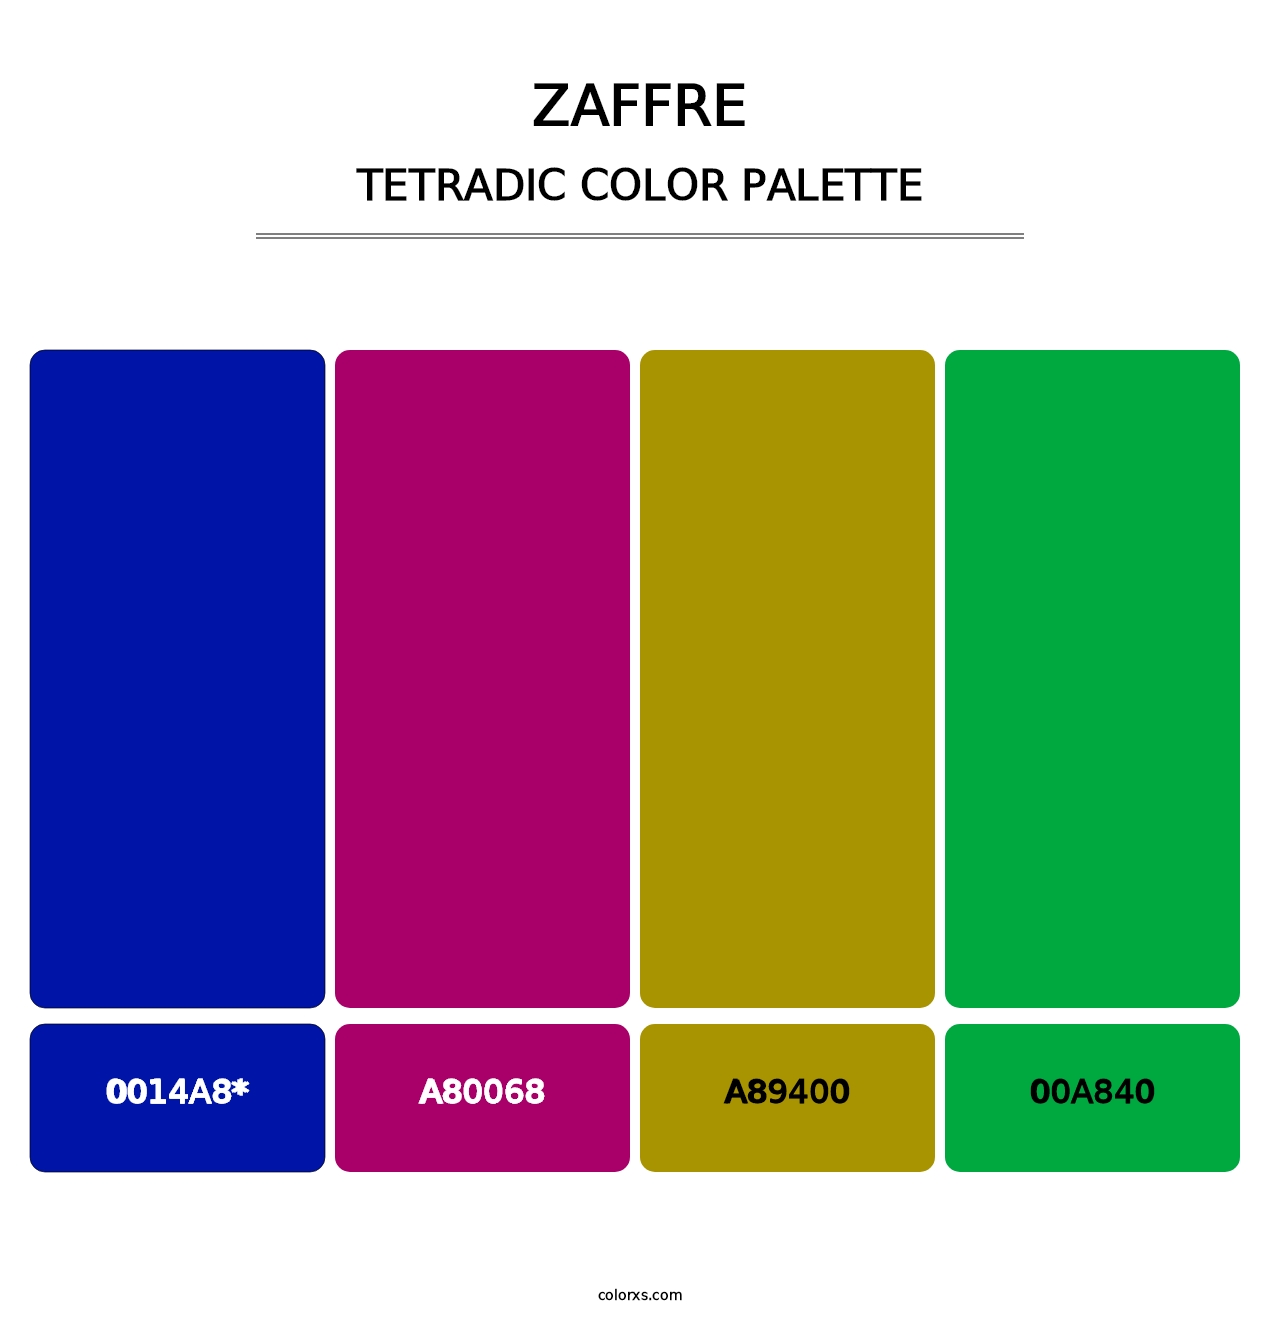 Zaffre - Tetradic Color Palette